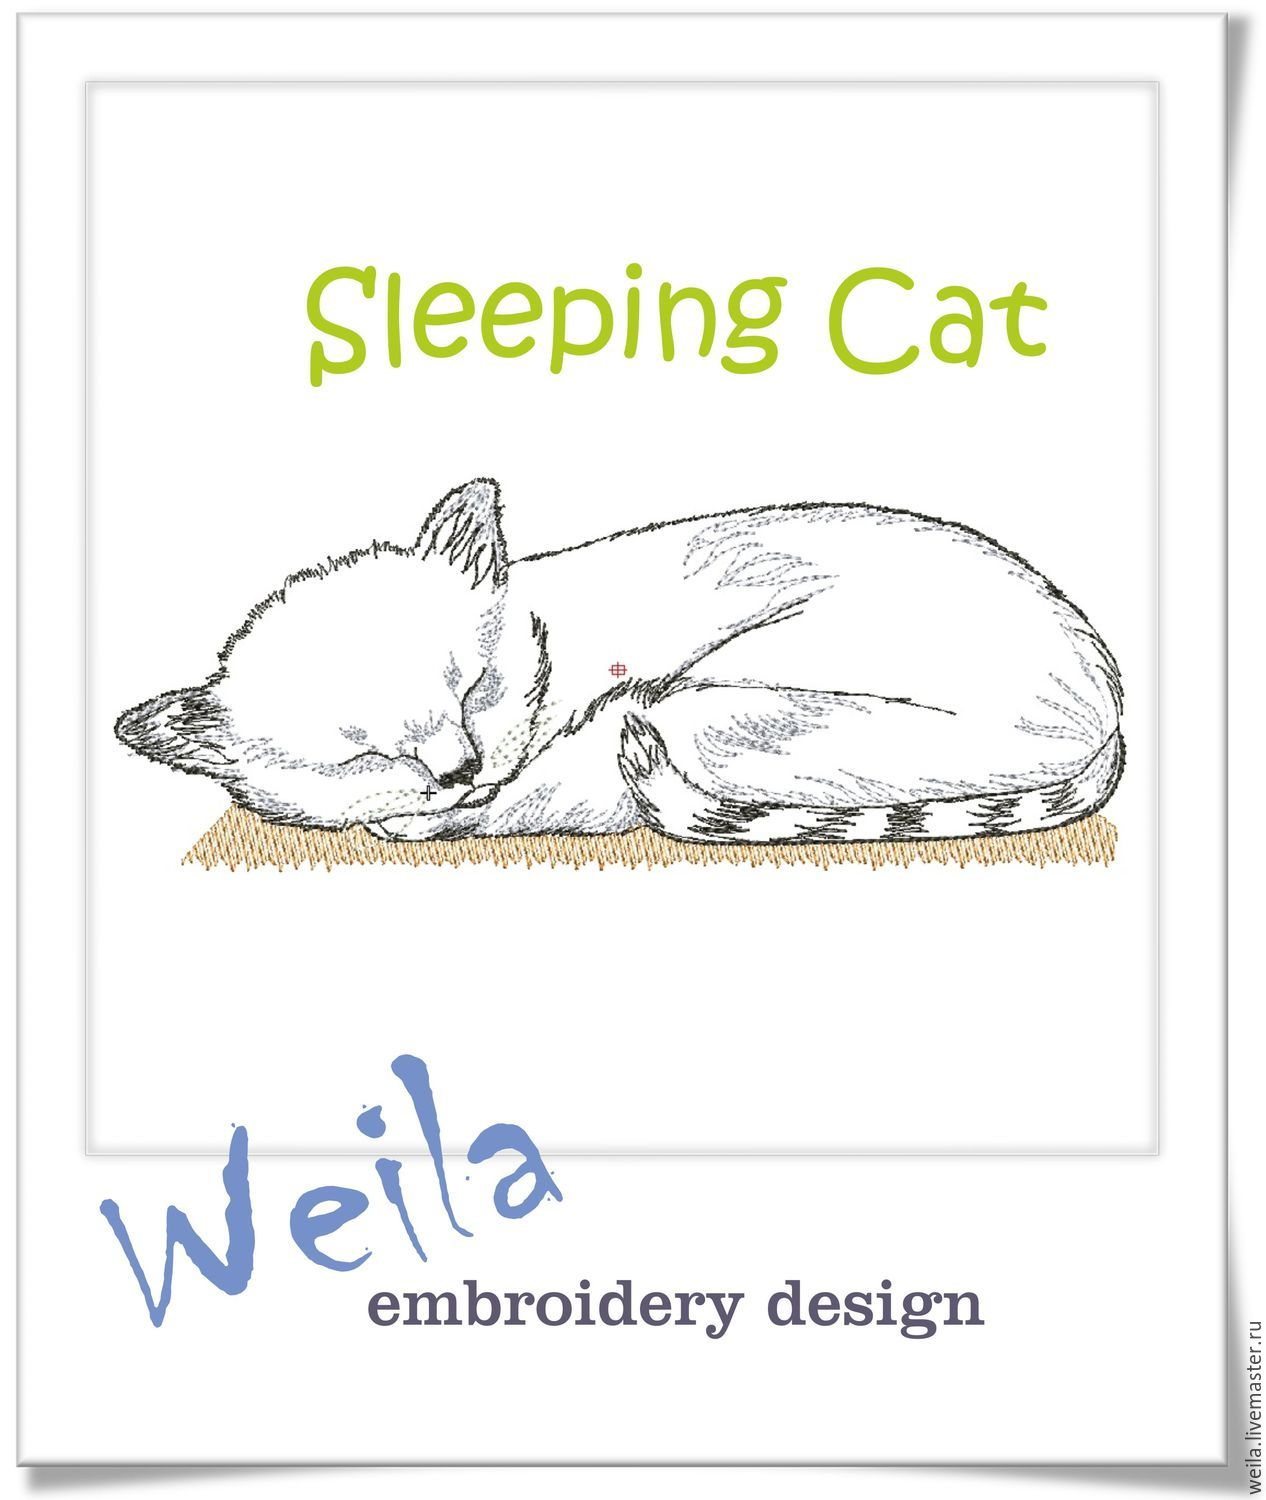 Embroidery Machine Patterns Sleeping Cat Embroidery Machine Patterns Design Weila Design